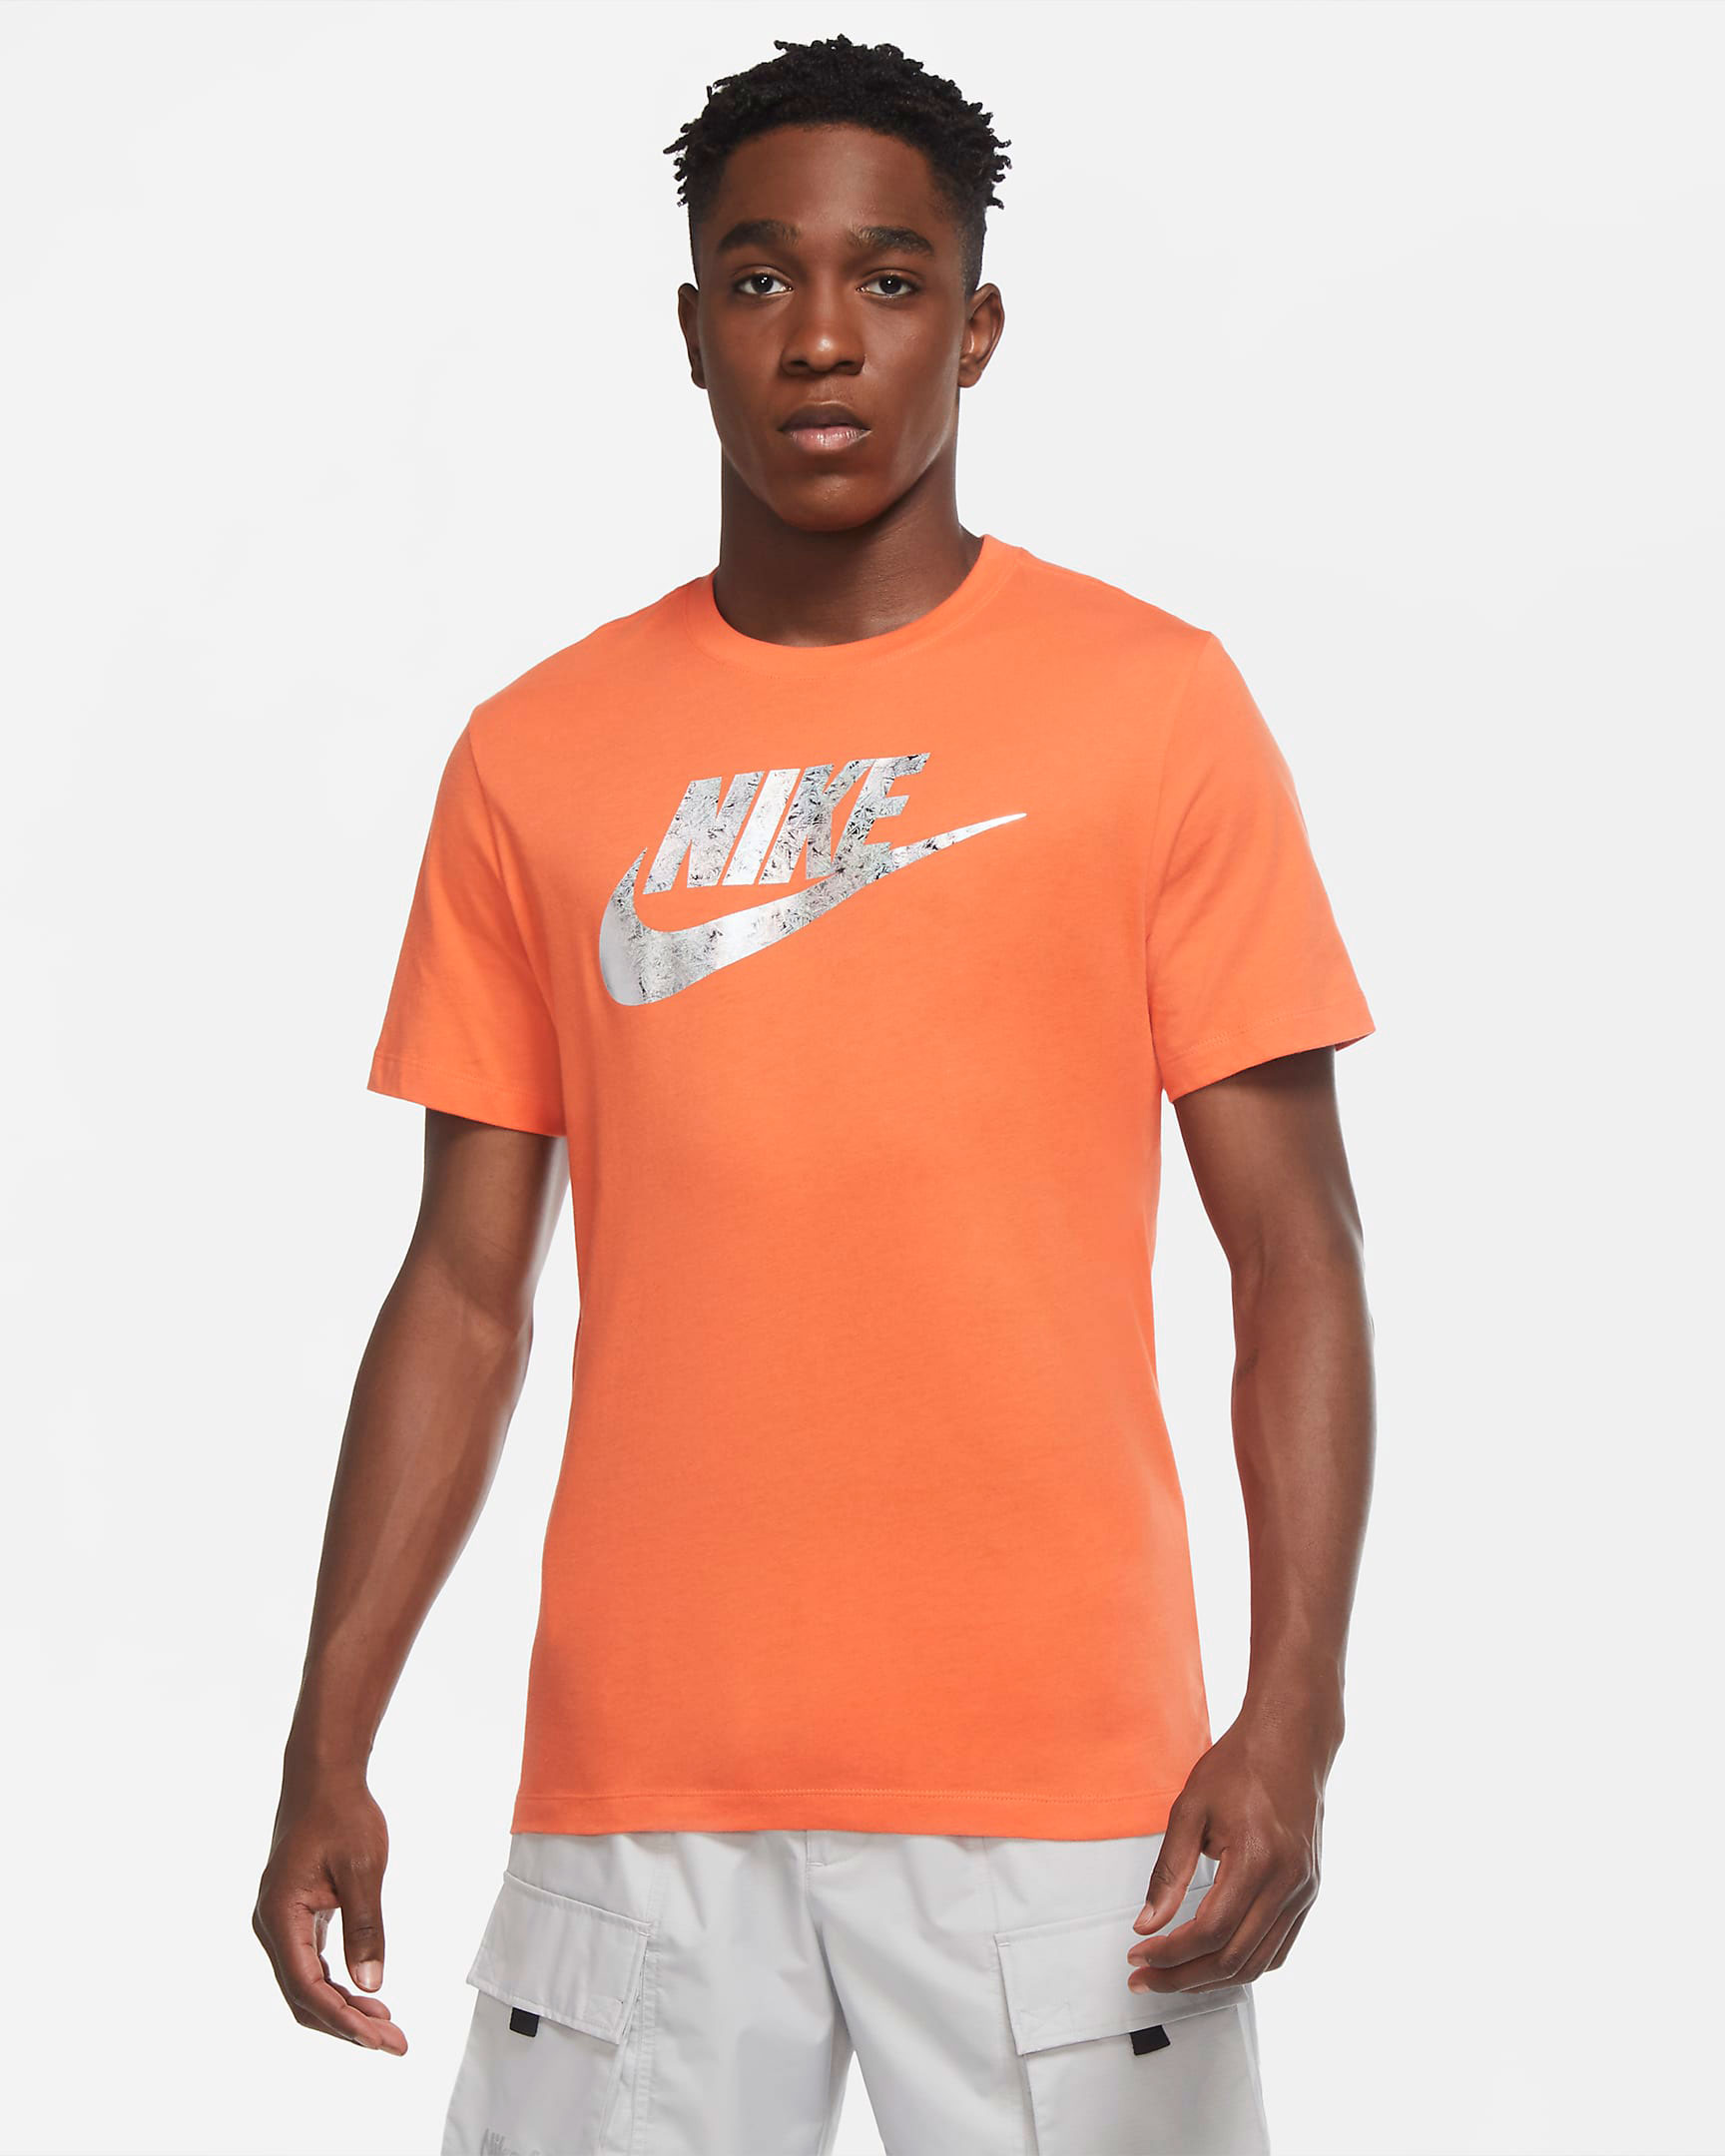 nike-foamposite-halloween-shirt-orange-silver-1